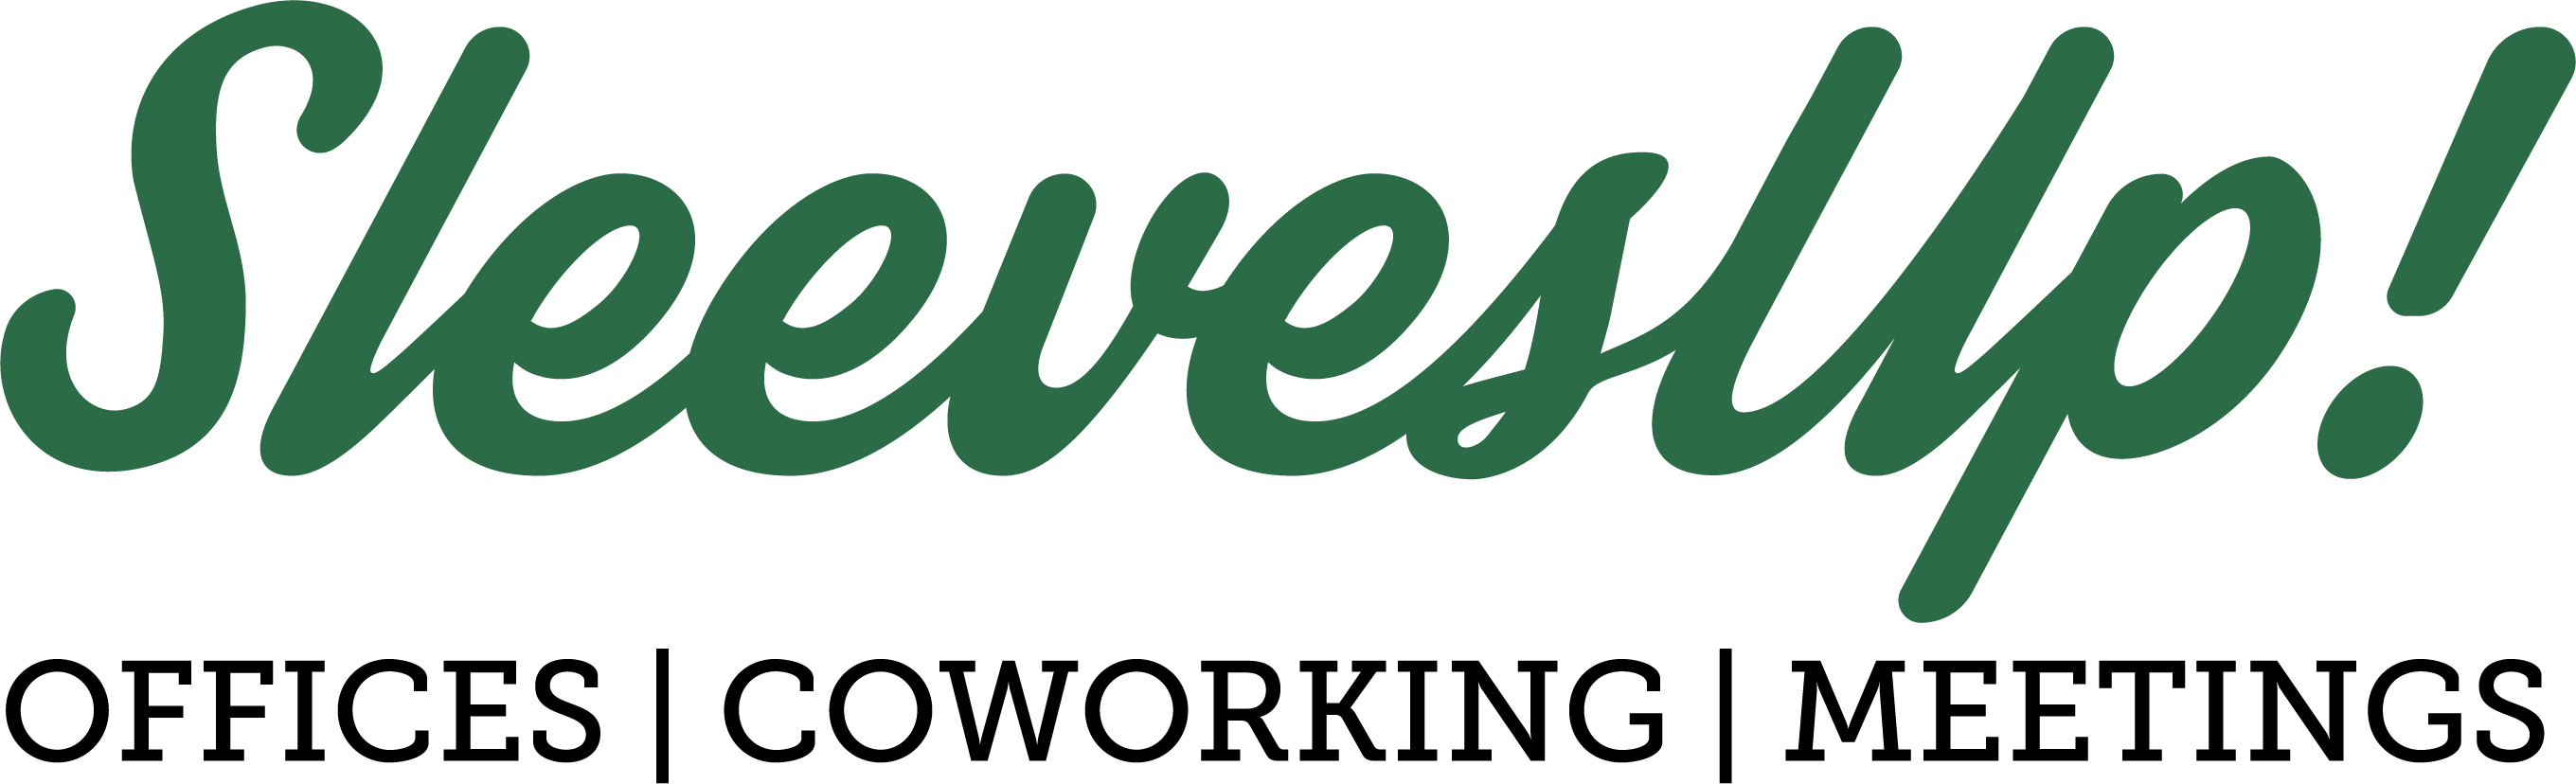 SleevesUp! Spaces GmbH - Offices / Coworking / Meetings Logo